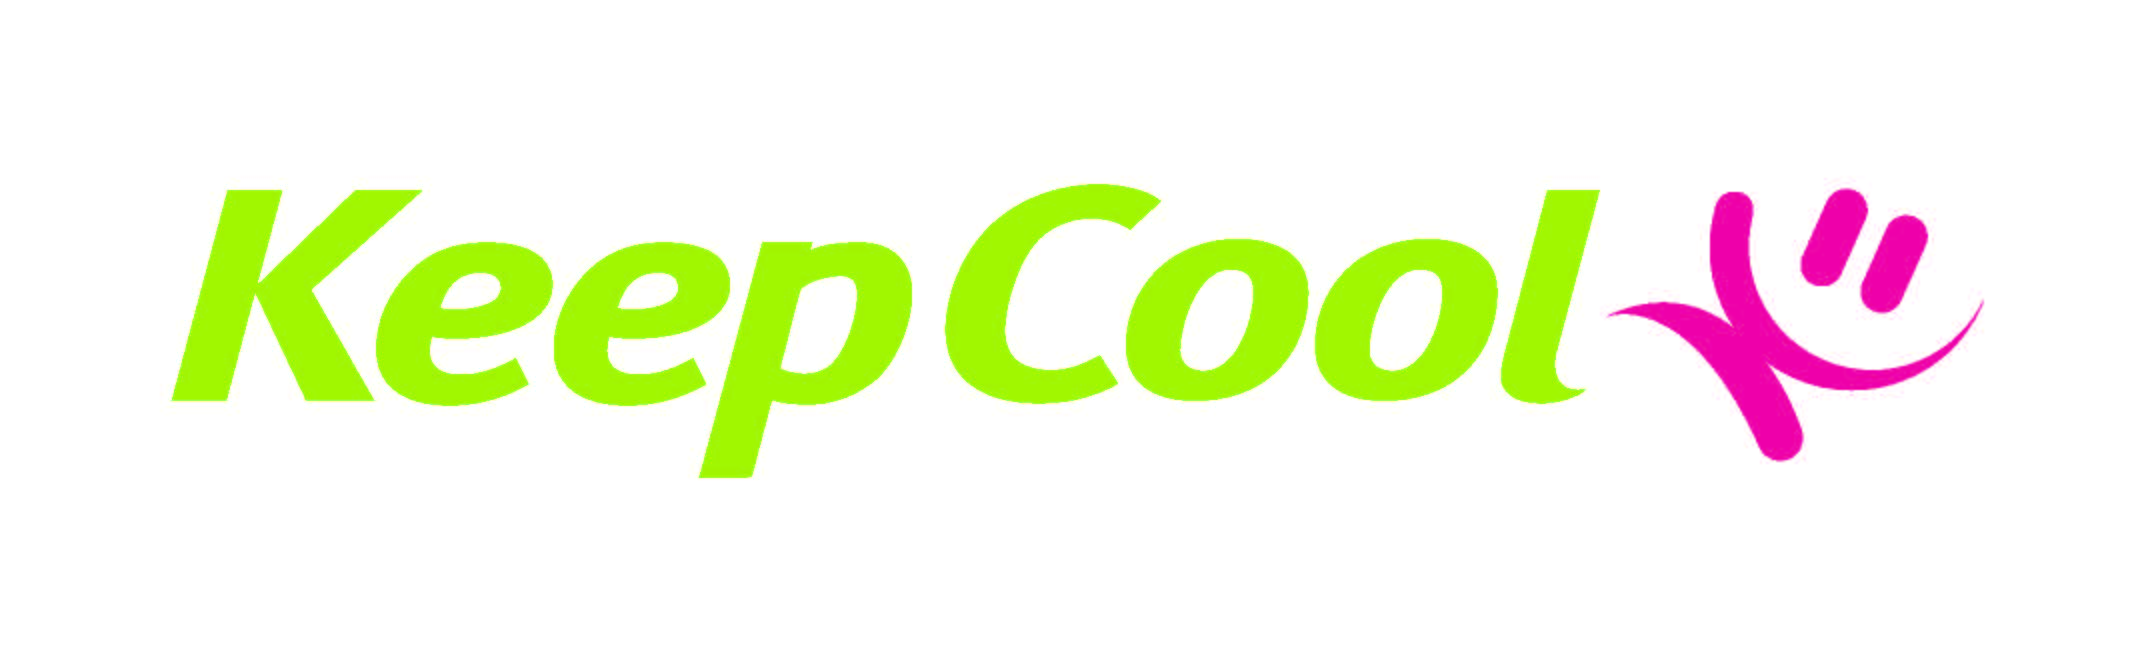 KEEP COOL logo